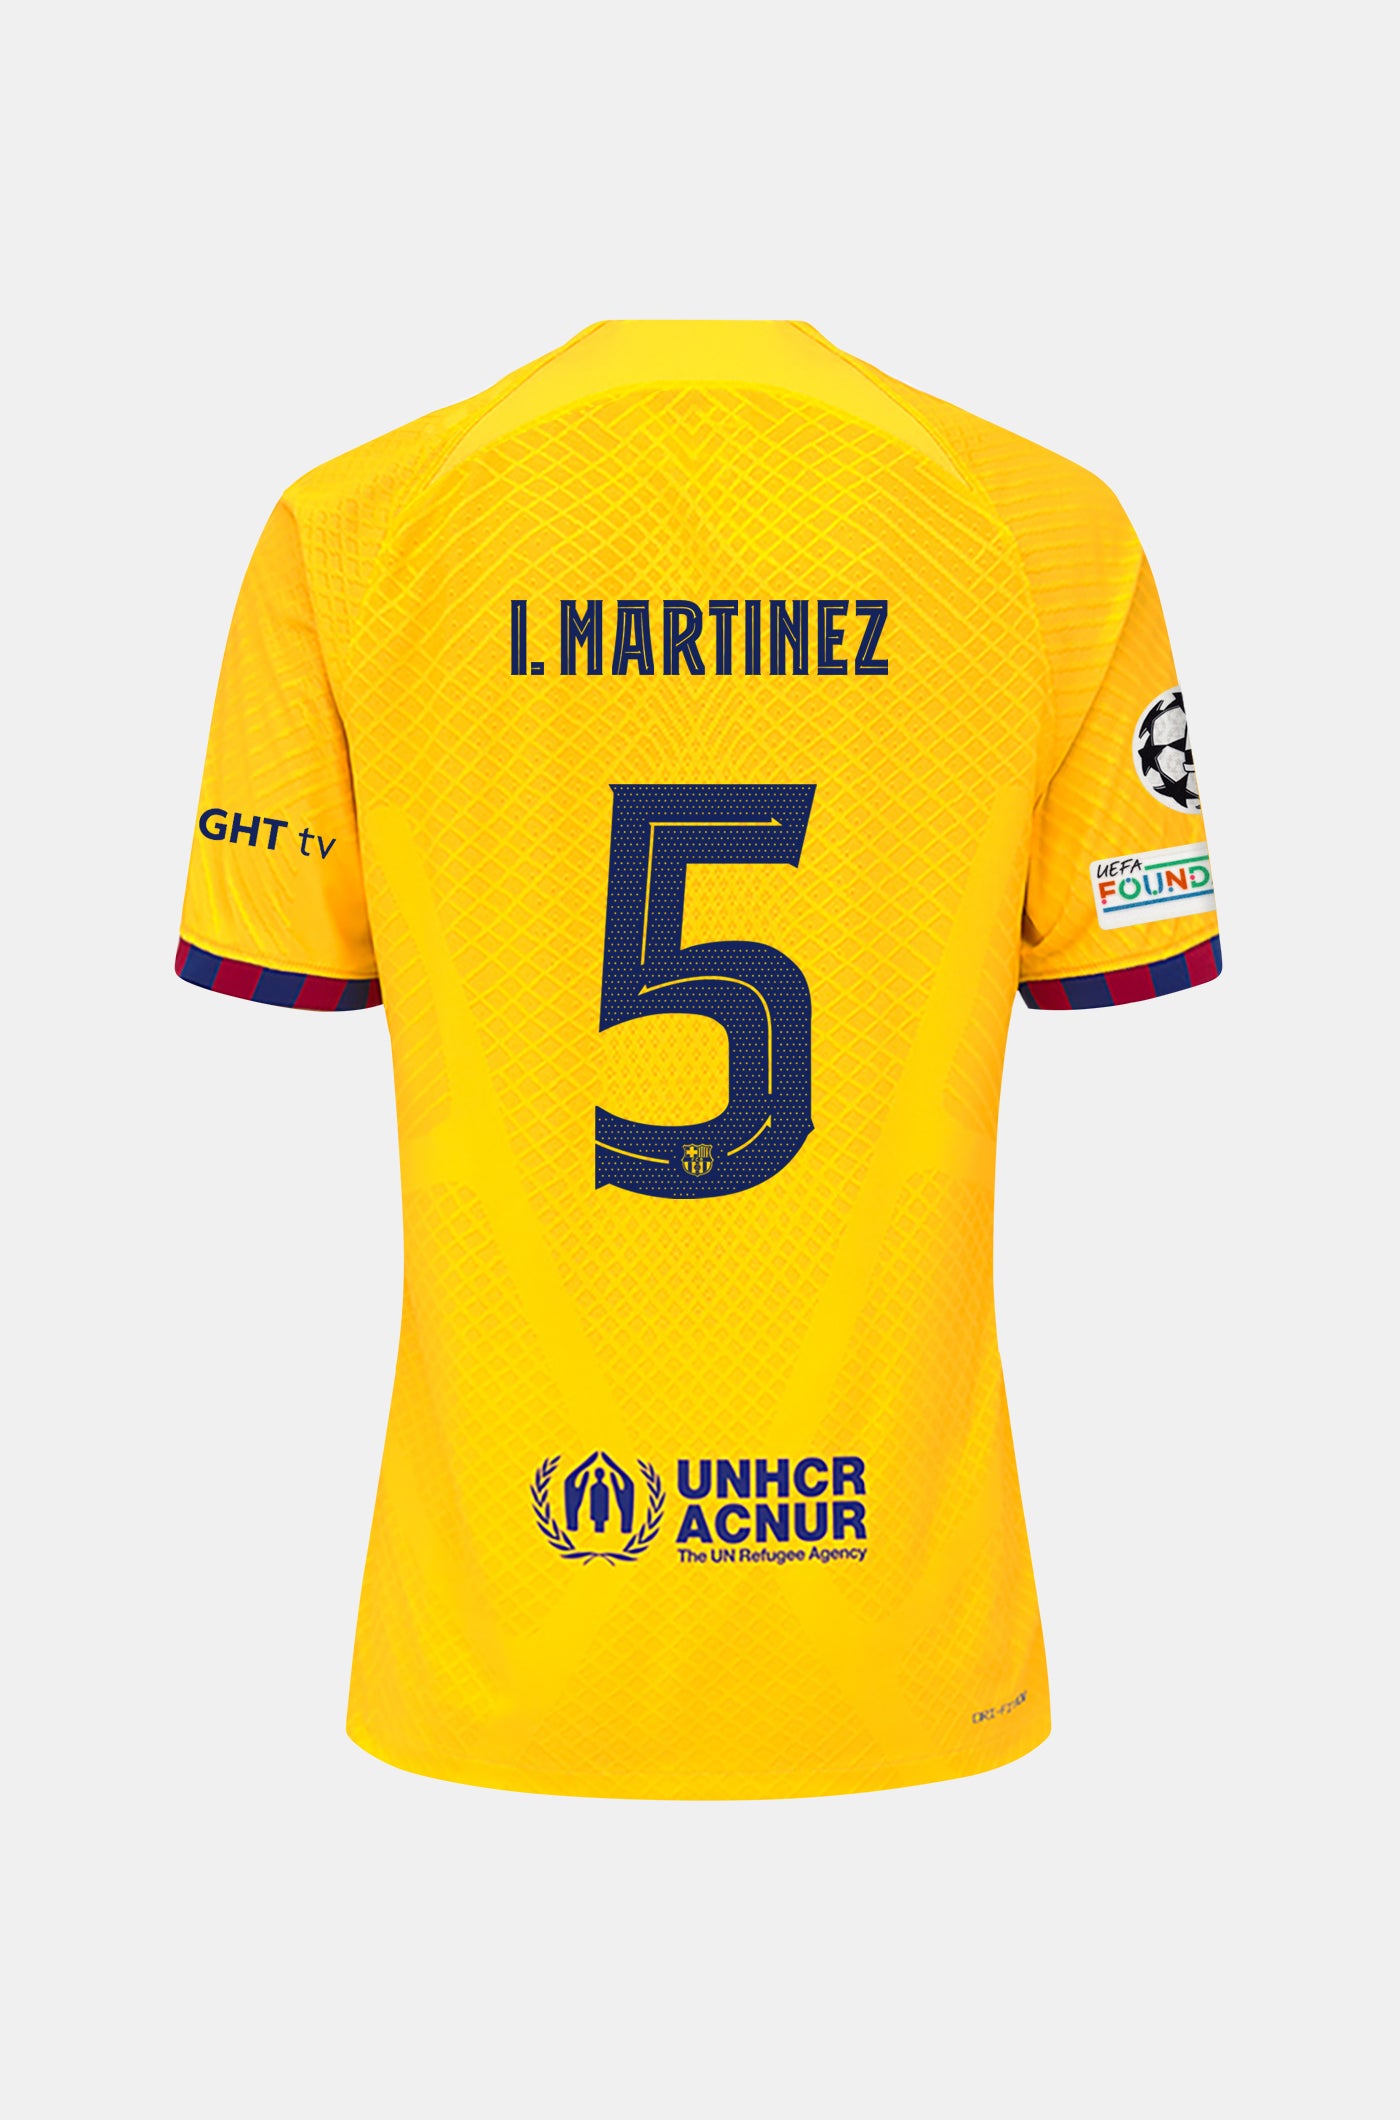 UCL FC Barcelona fourth shirt 23/24 Player’s Edition - I. MARTÍNEZ